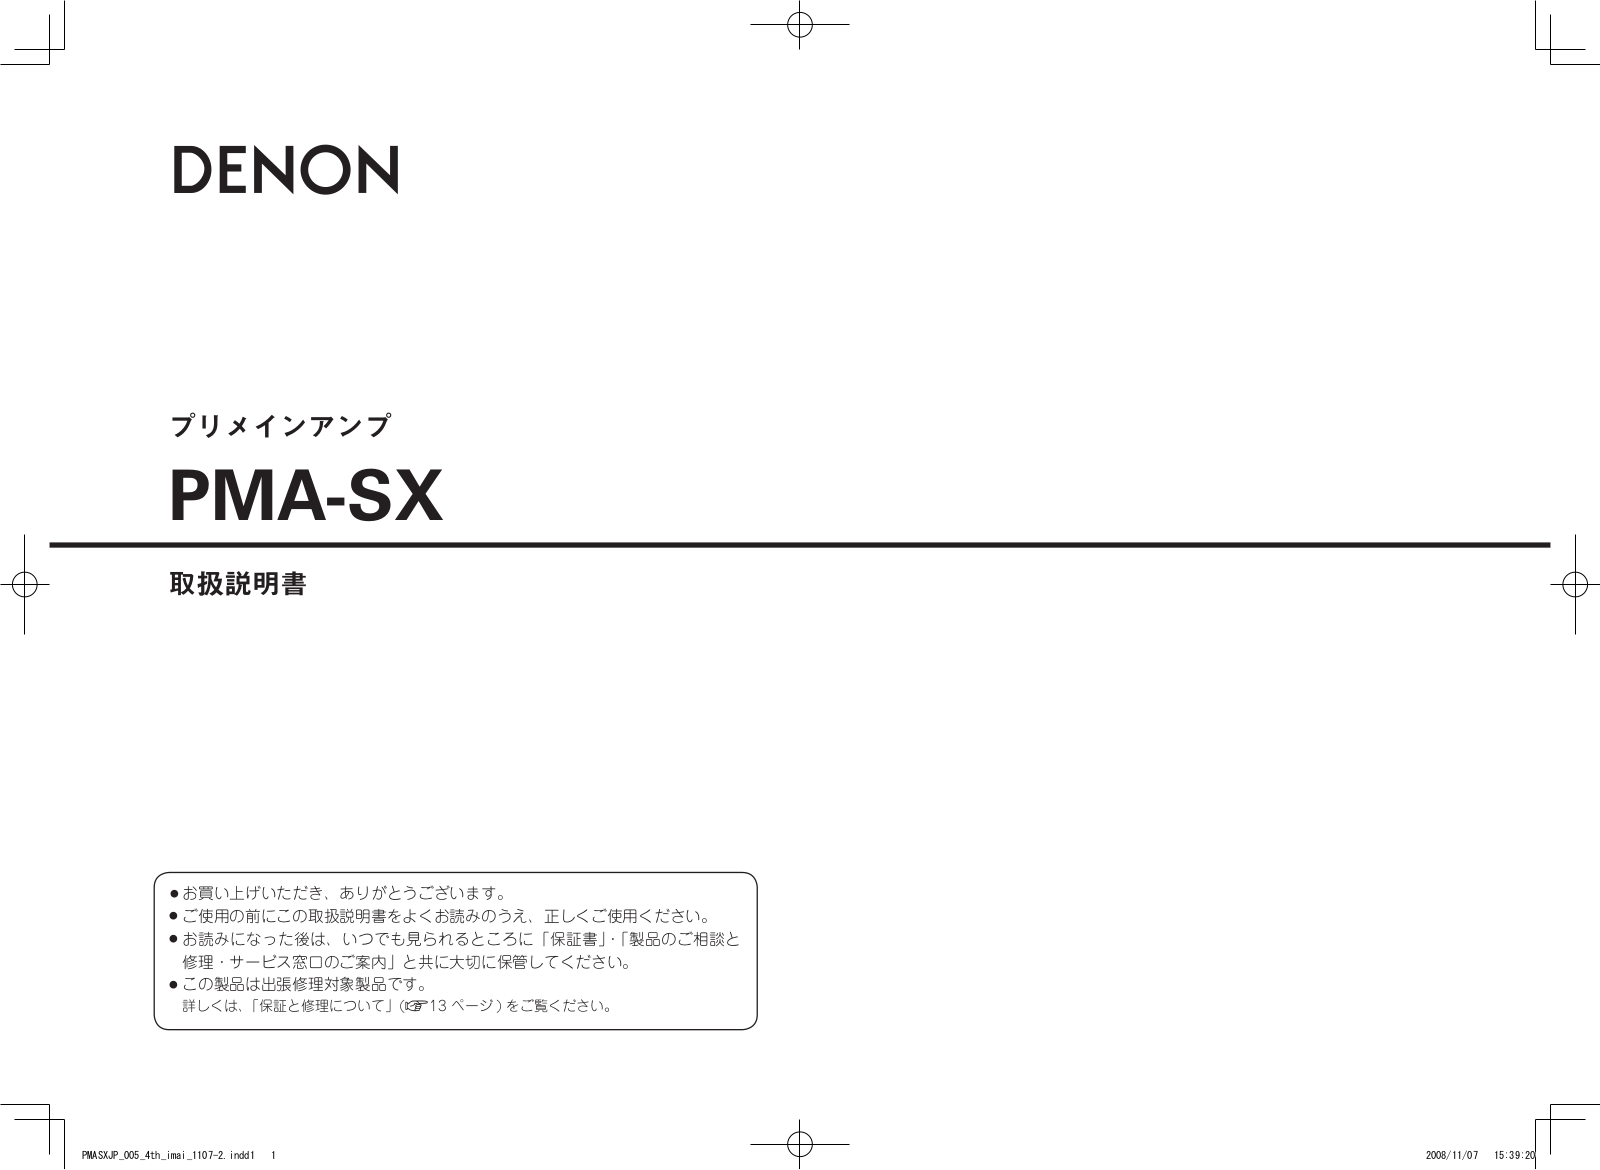 Denon PMA-SX Owner's Manual